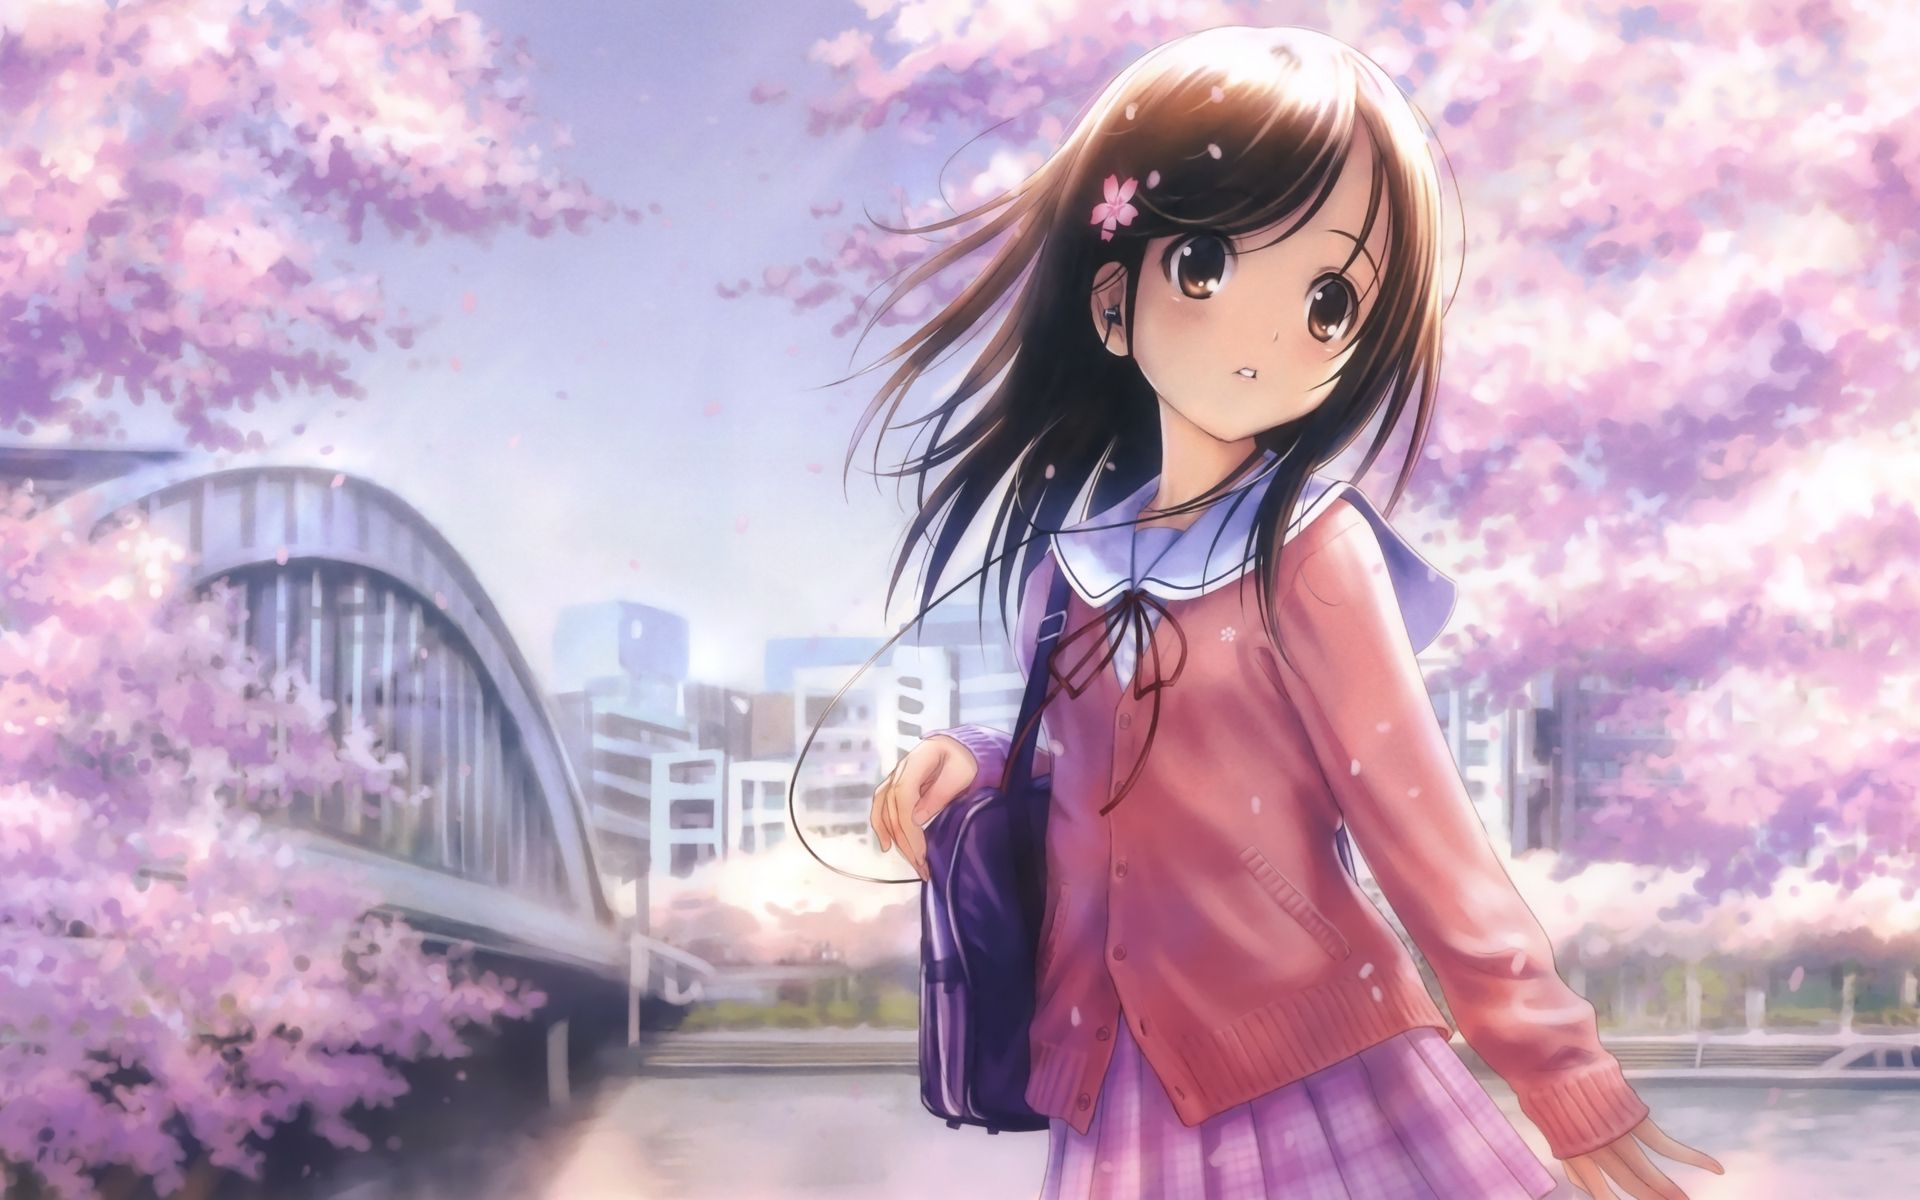 Anime girl with pink hair and purple dress walking by a river - Anime girl, kawaii